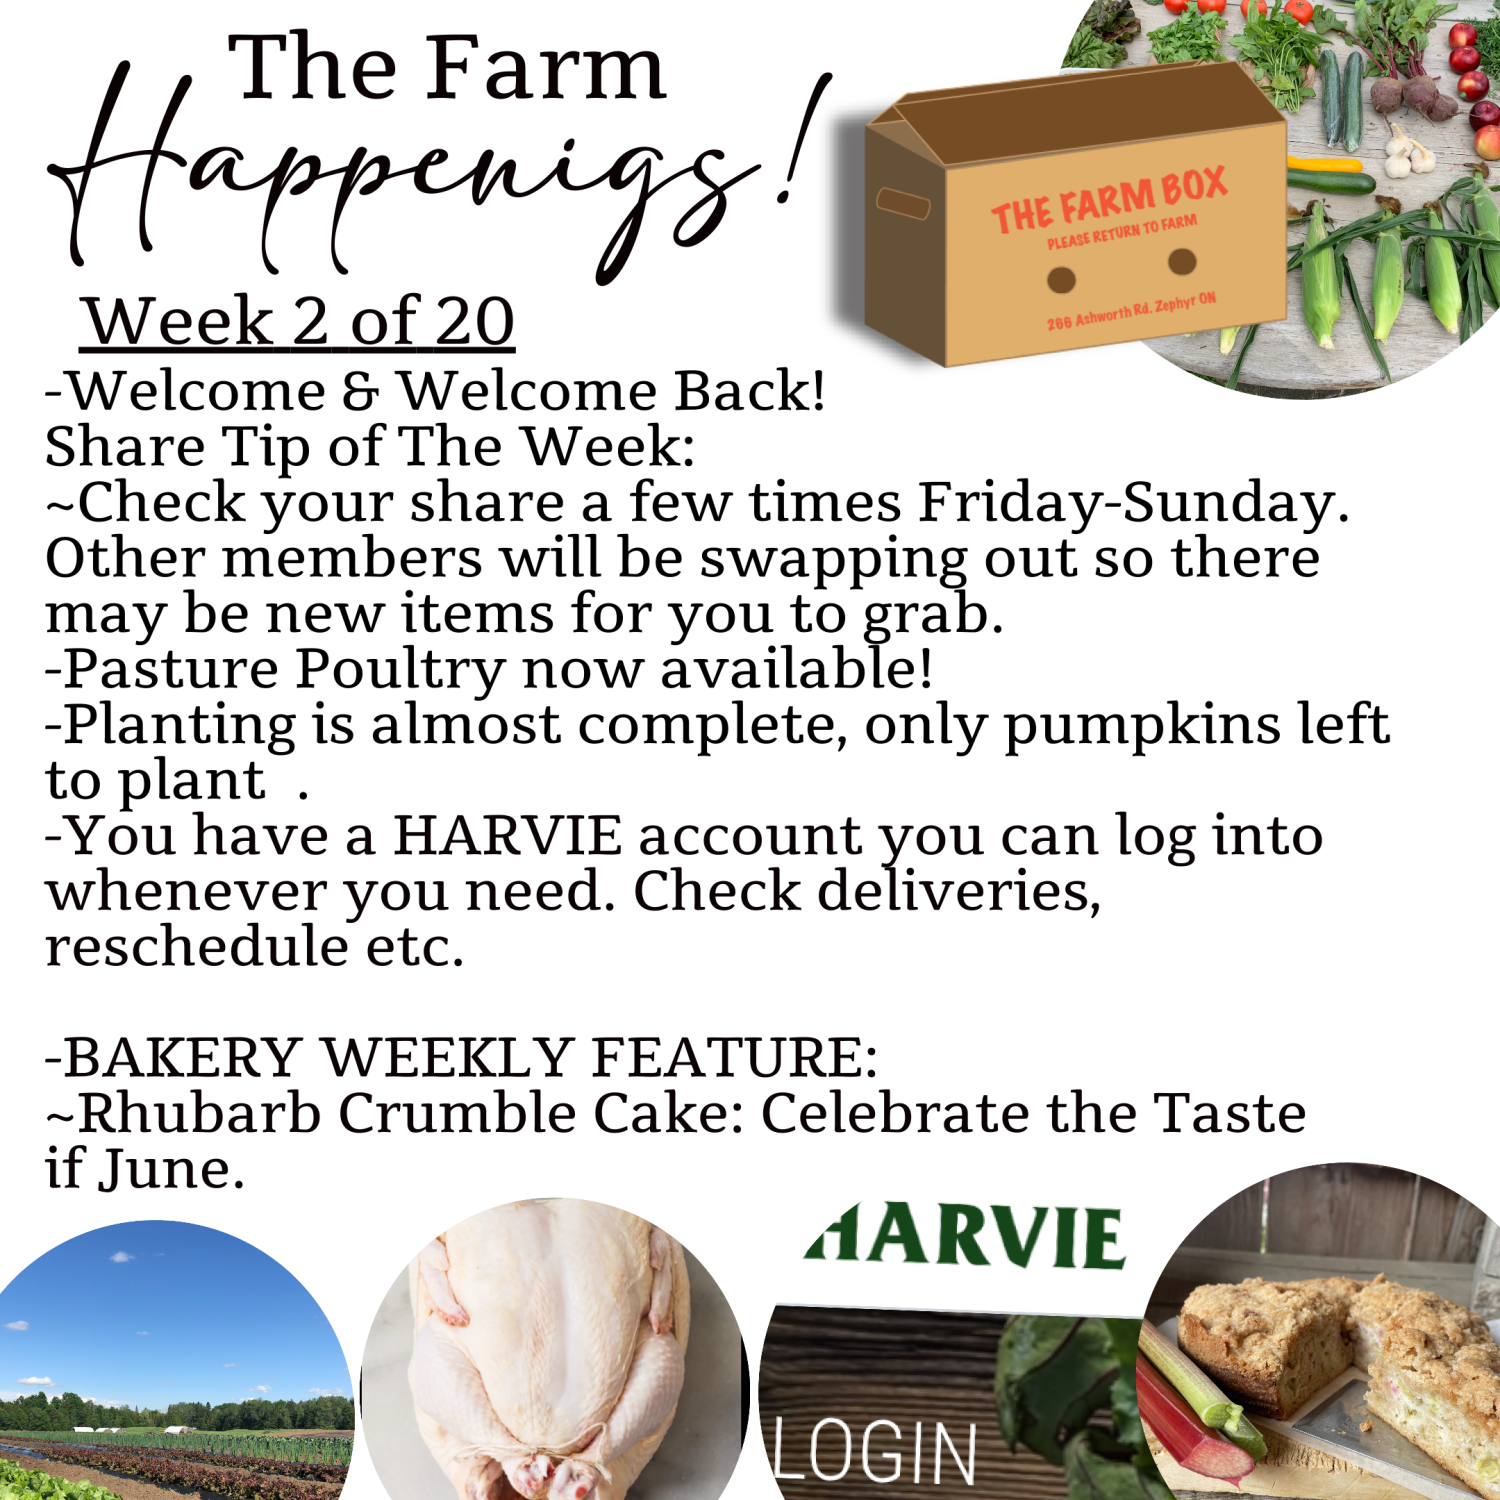 Next Happening: "The Farm Box"-Coopers CSA Farm Farm Happenings Week 2 of 20